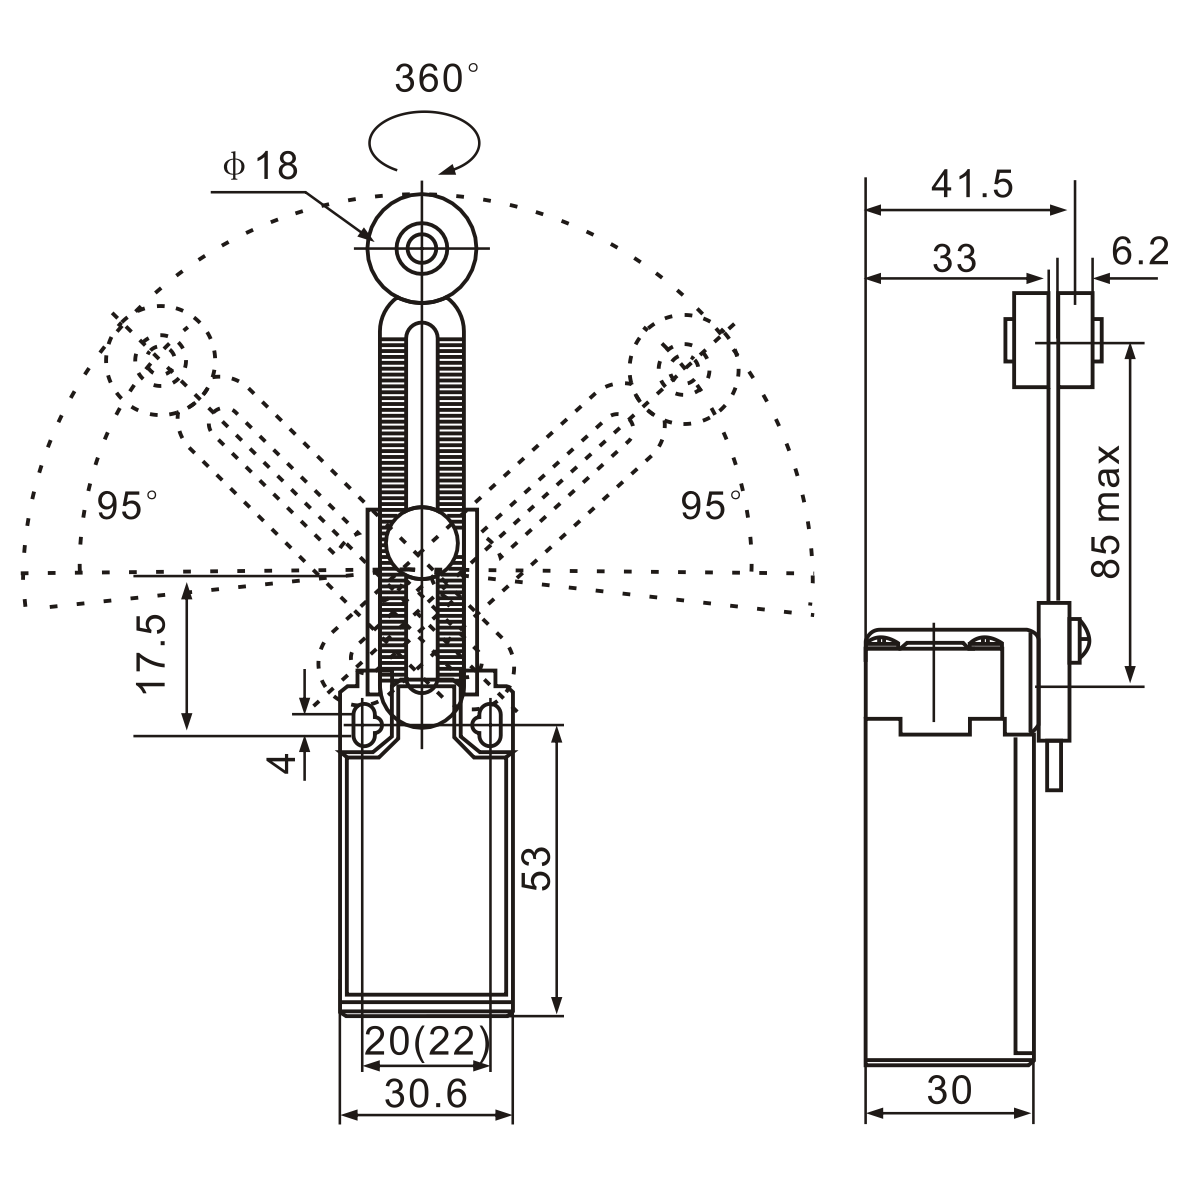 XCK-131 Adjustable Roller Lever Arm Limit Switch Diagram